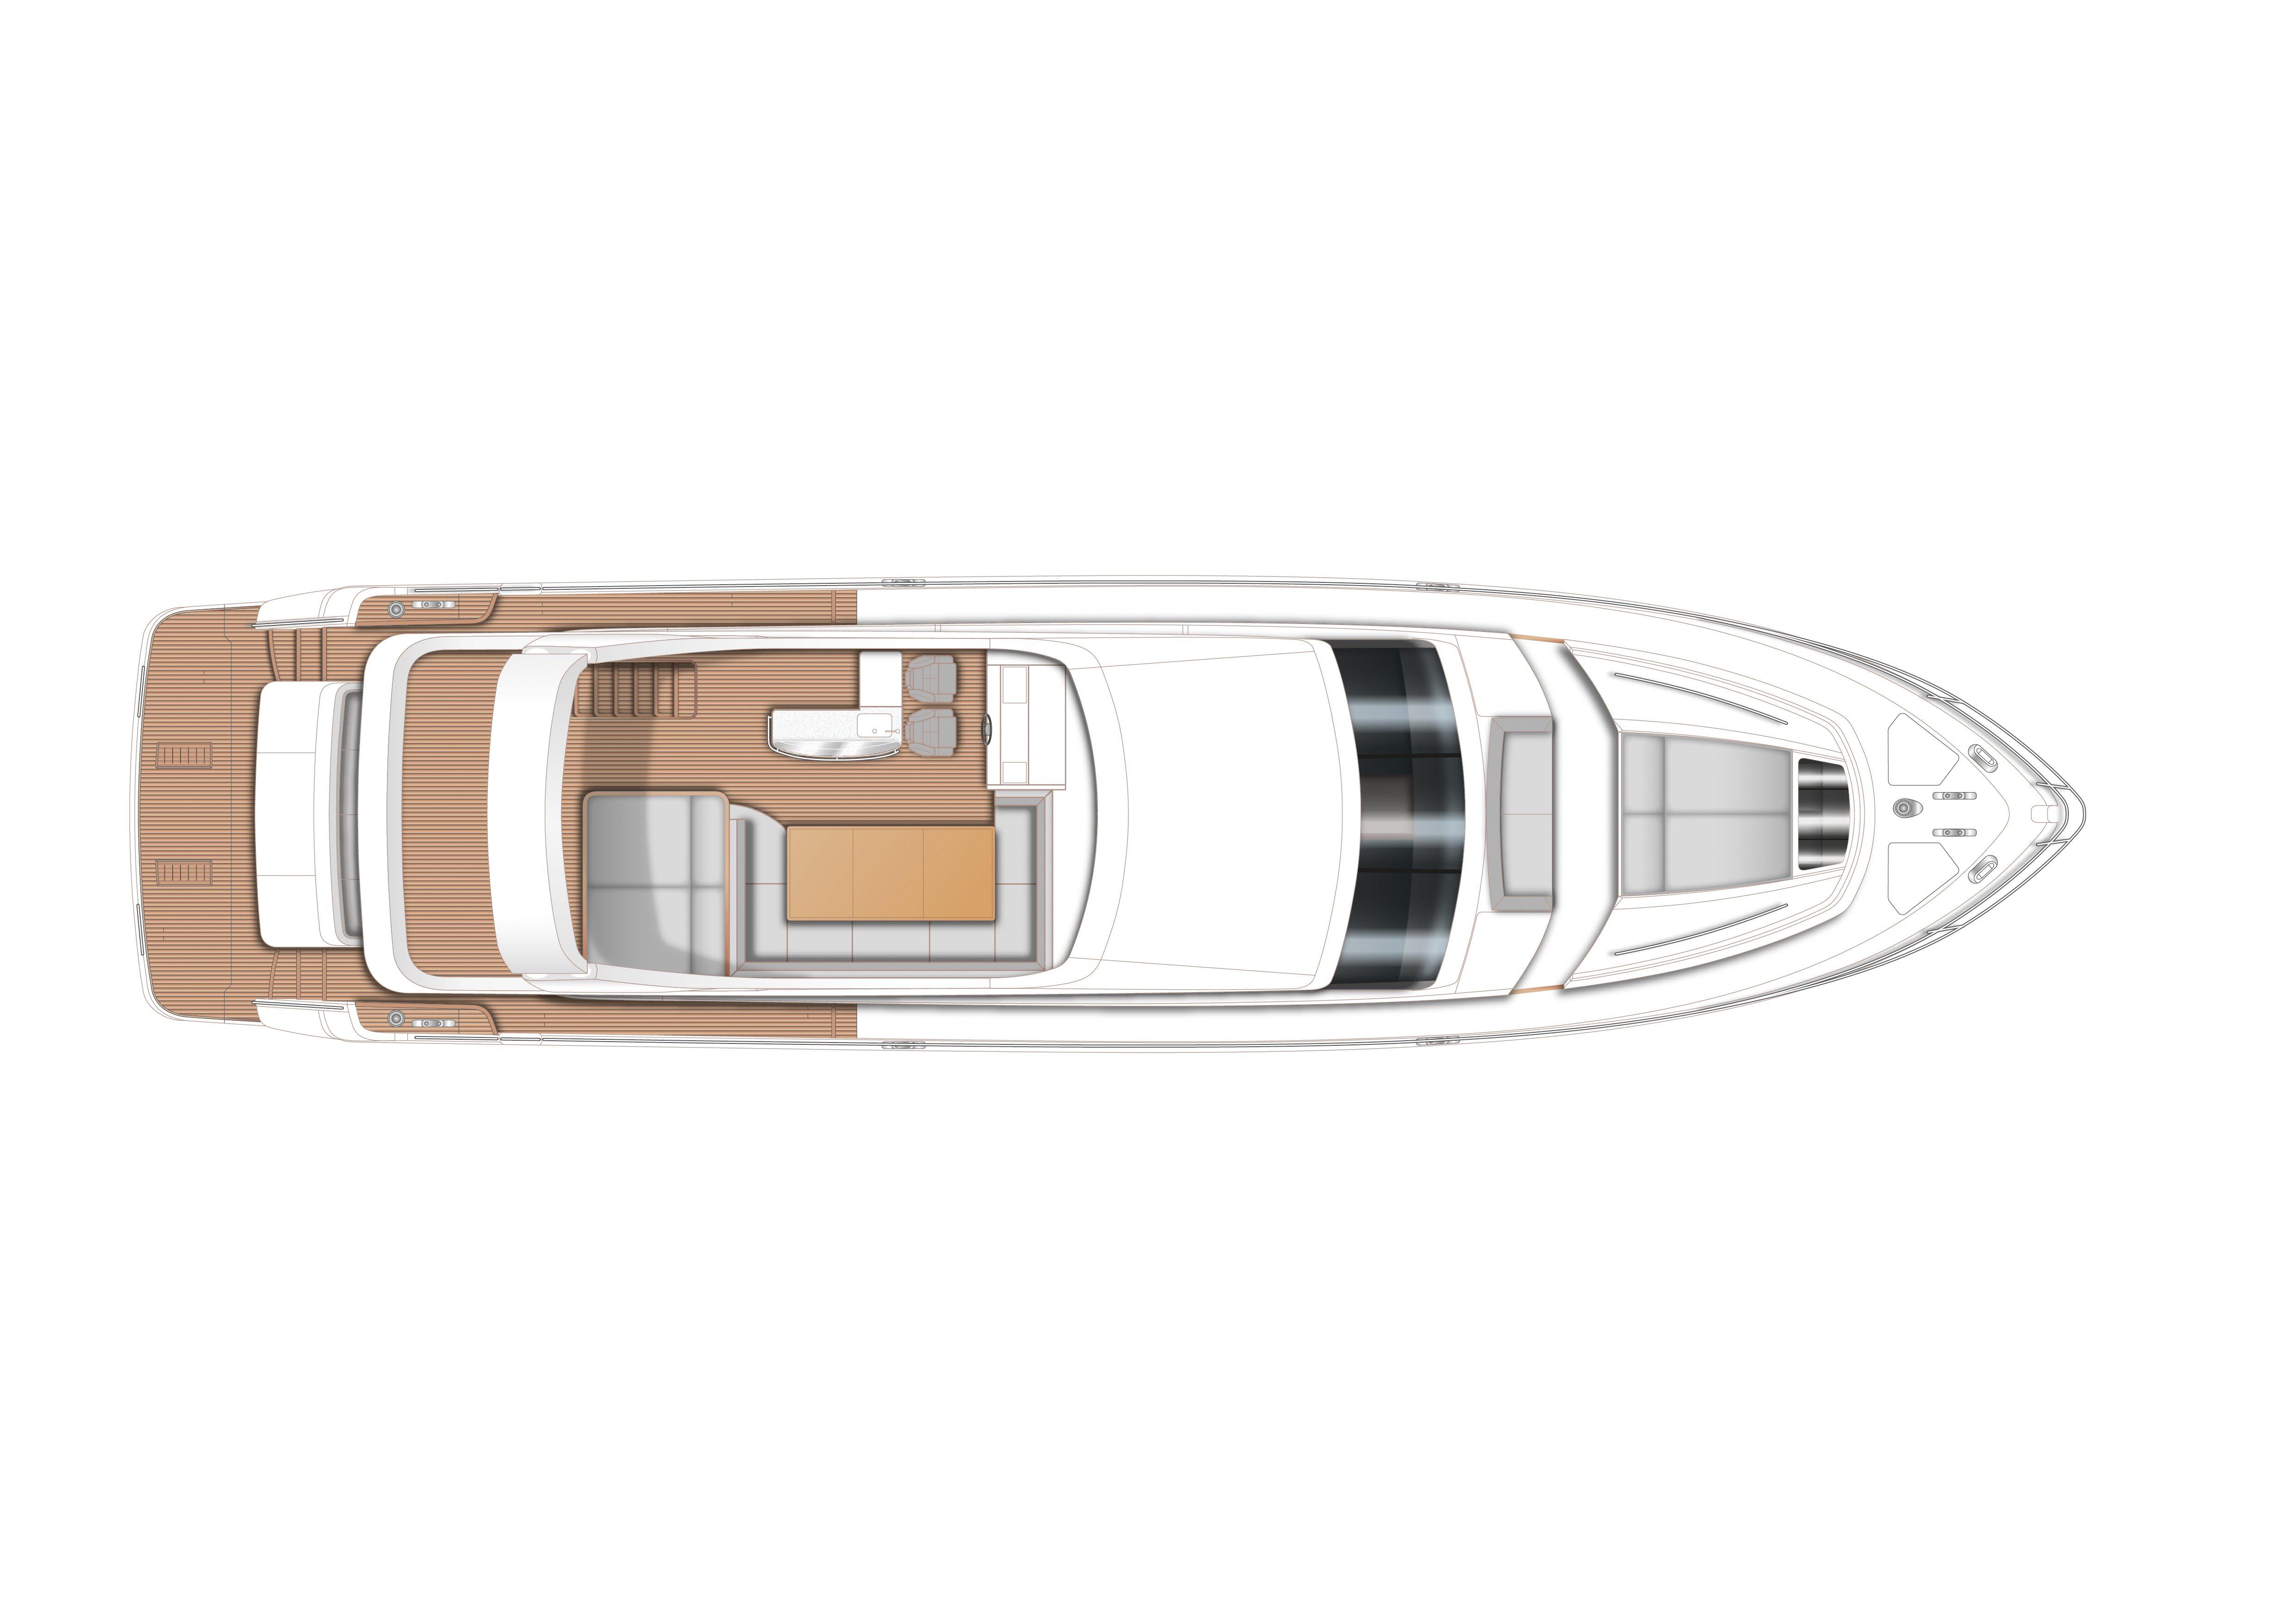 Manufacturer Provided Image: Princess Flybridge 72 Motor Yacht Flybridge Layout Plan